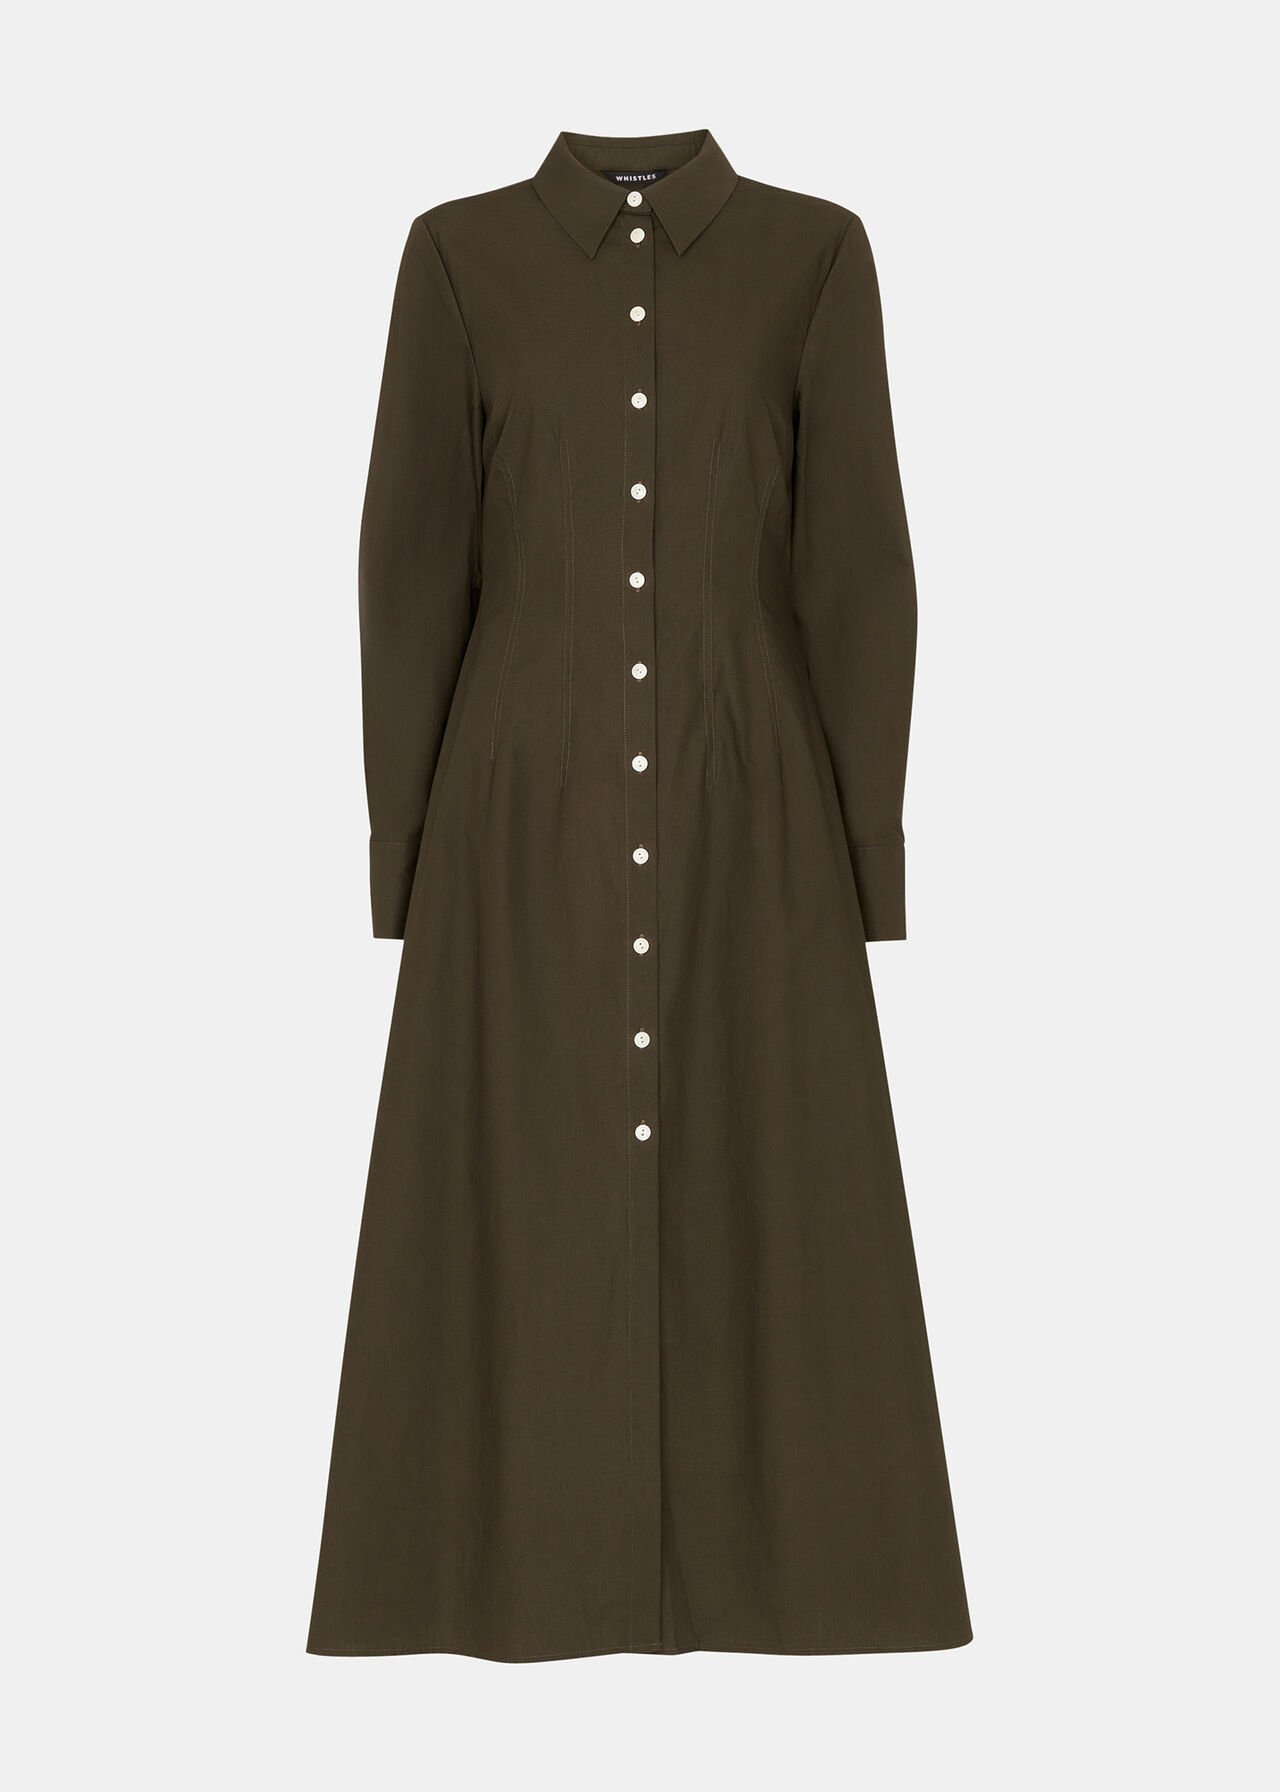 Jean Poplin Shirt Dress